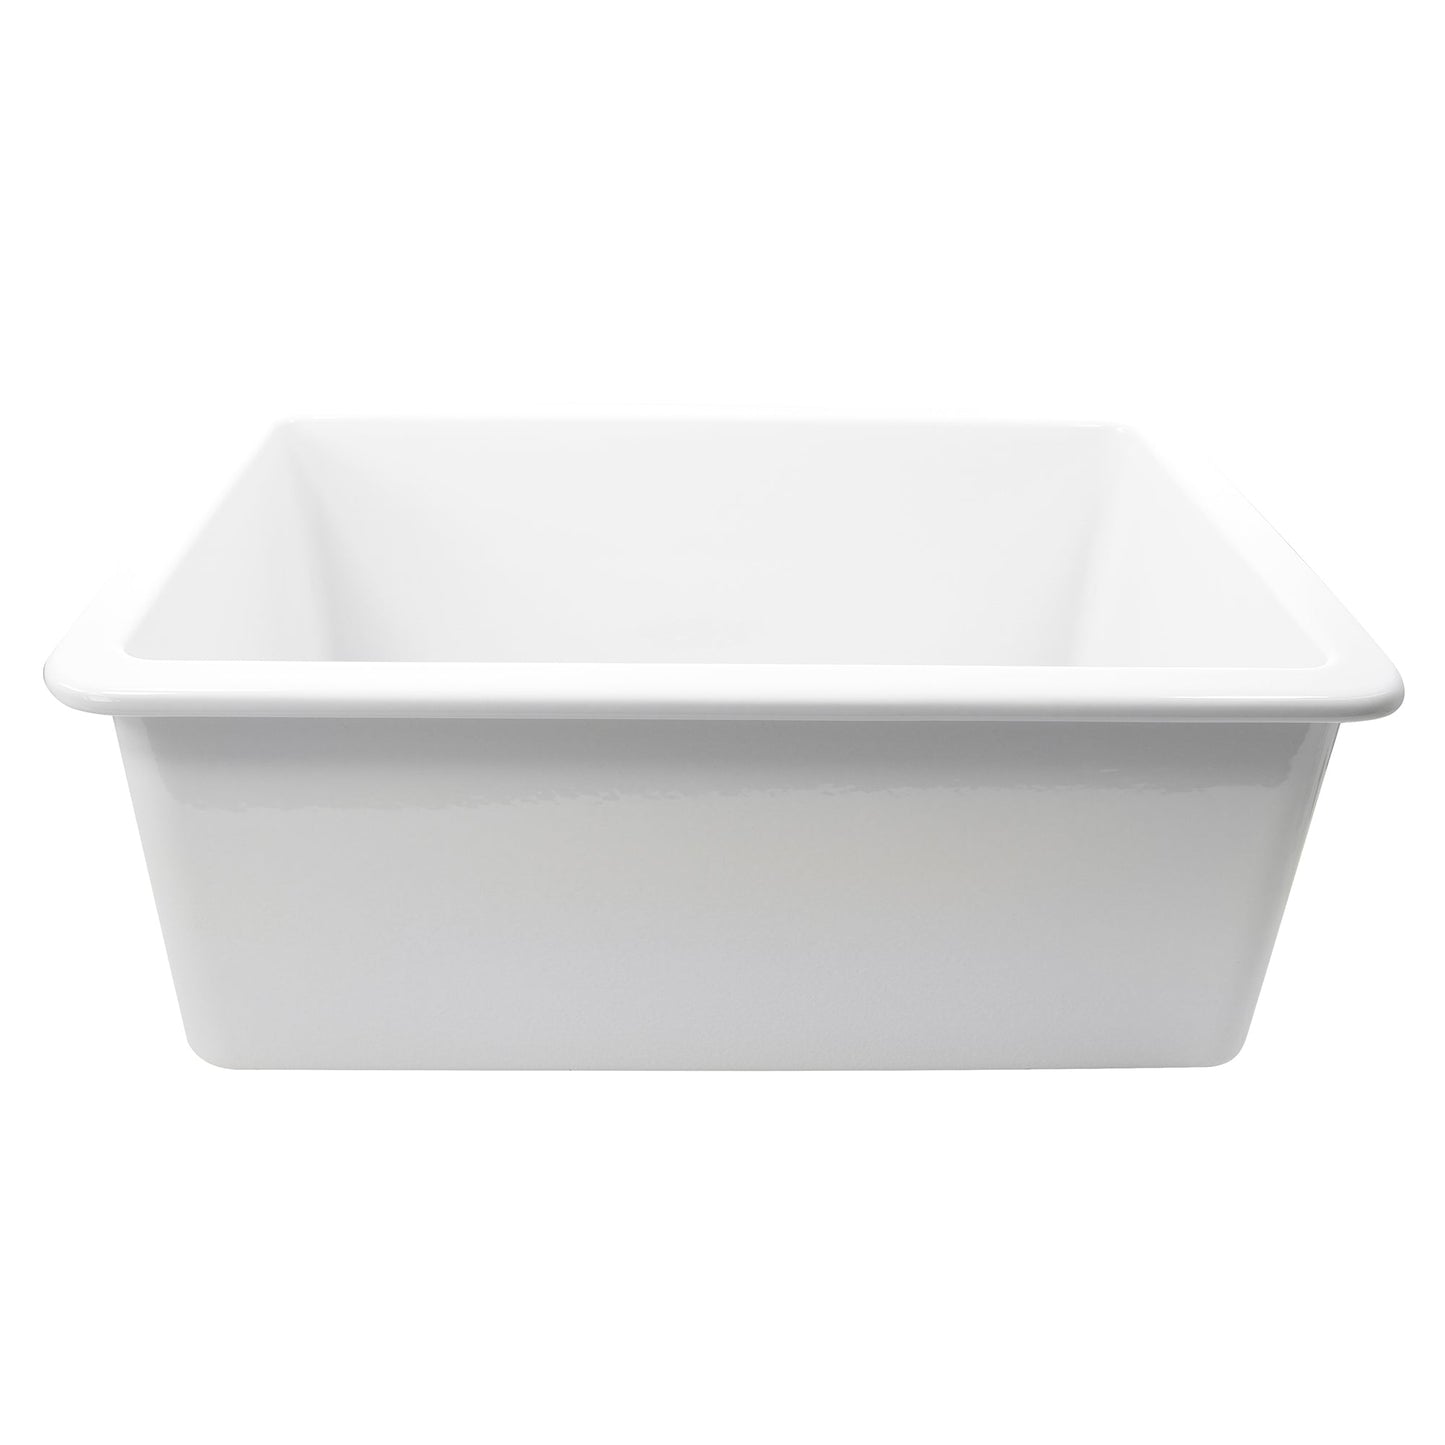 Nantucket Sinks Cape Collection 27" Rectangle Undermount Porcelain Enamel Glaze White Fireclay Single Bowl Kitchen Sink